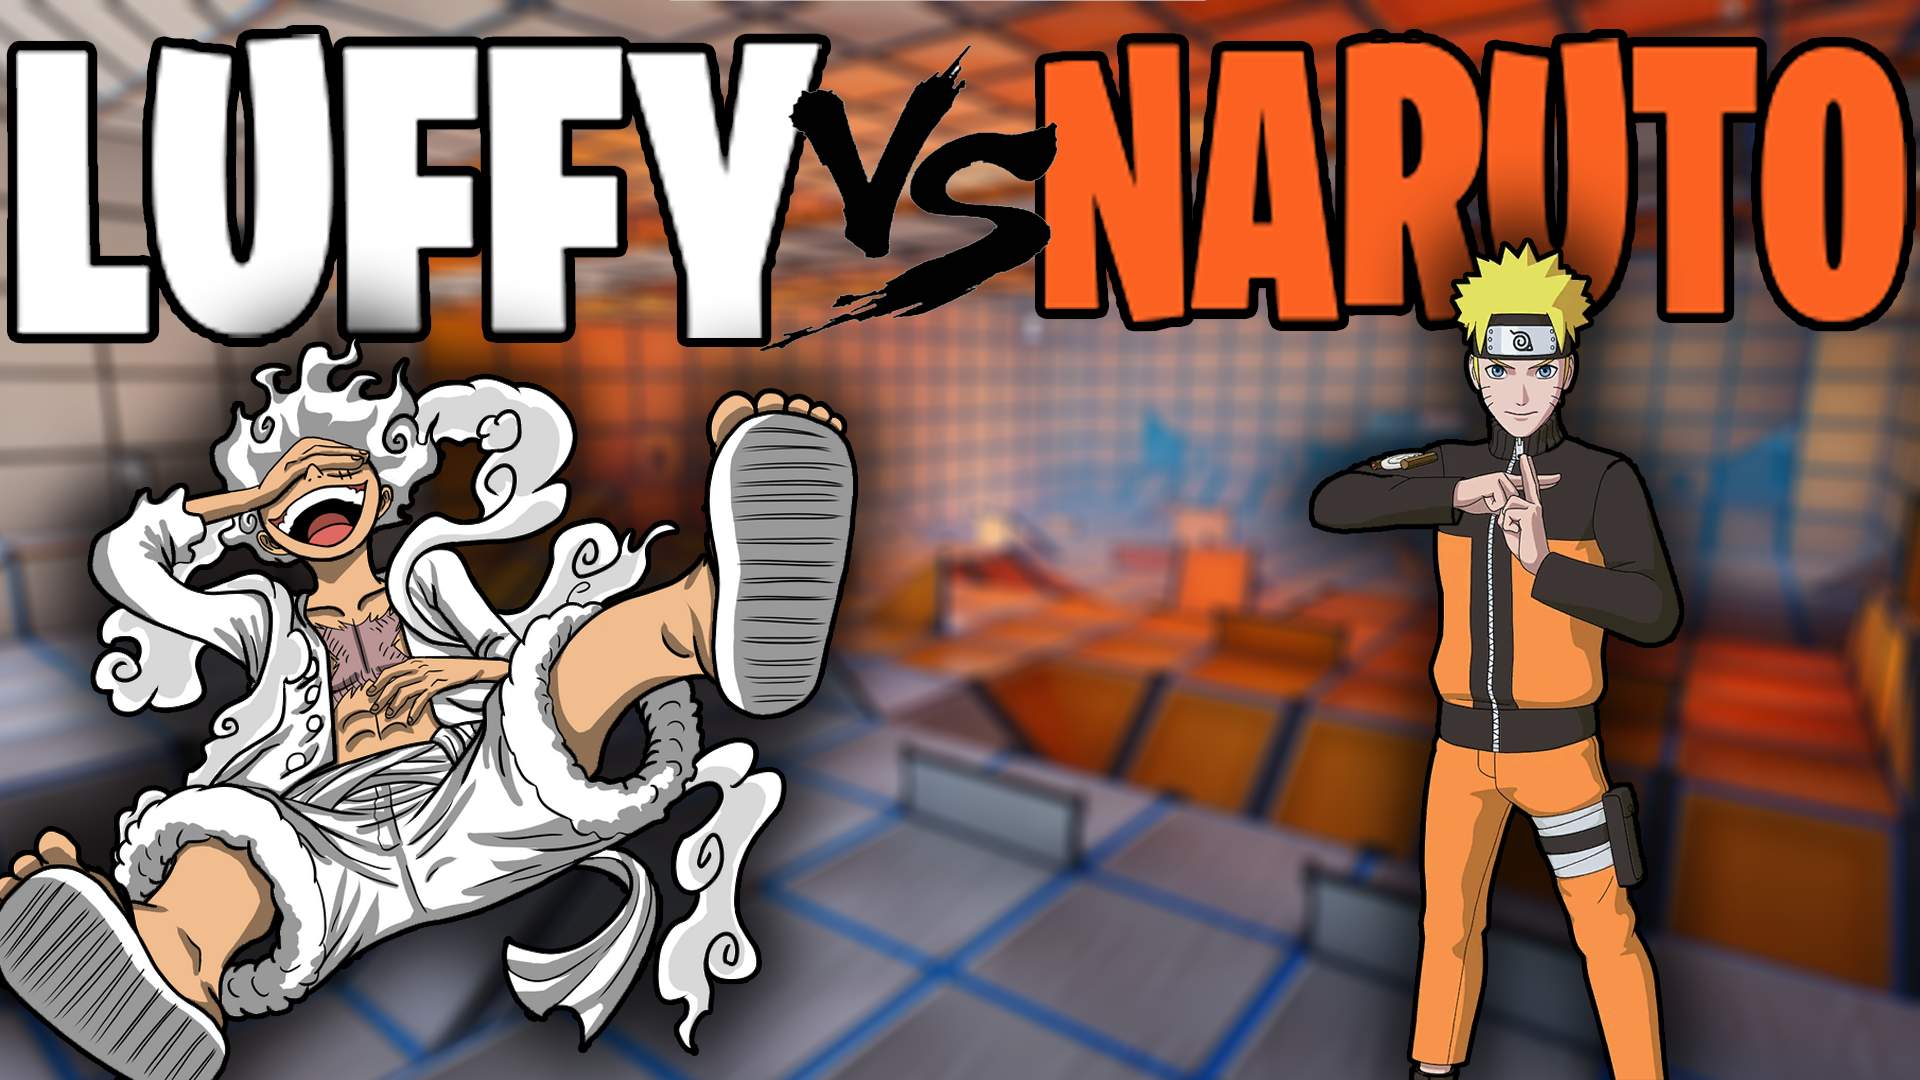 LUFFY VS NARUTO | ARENA image 2